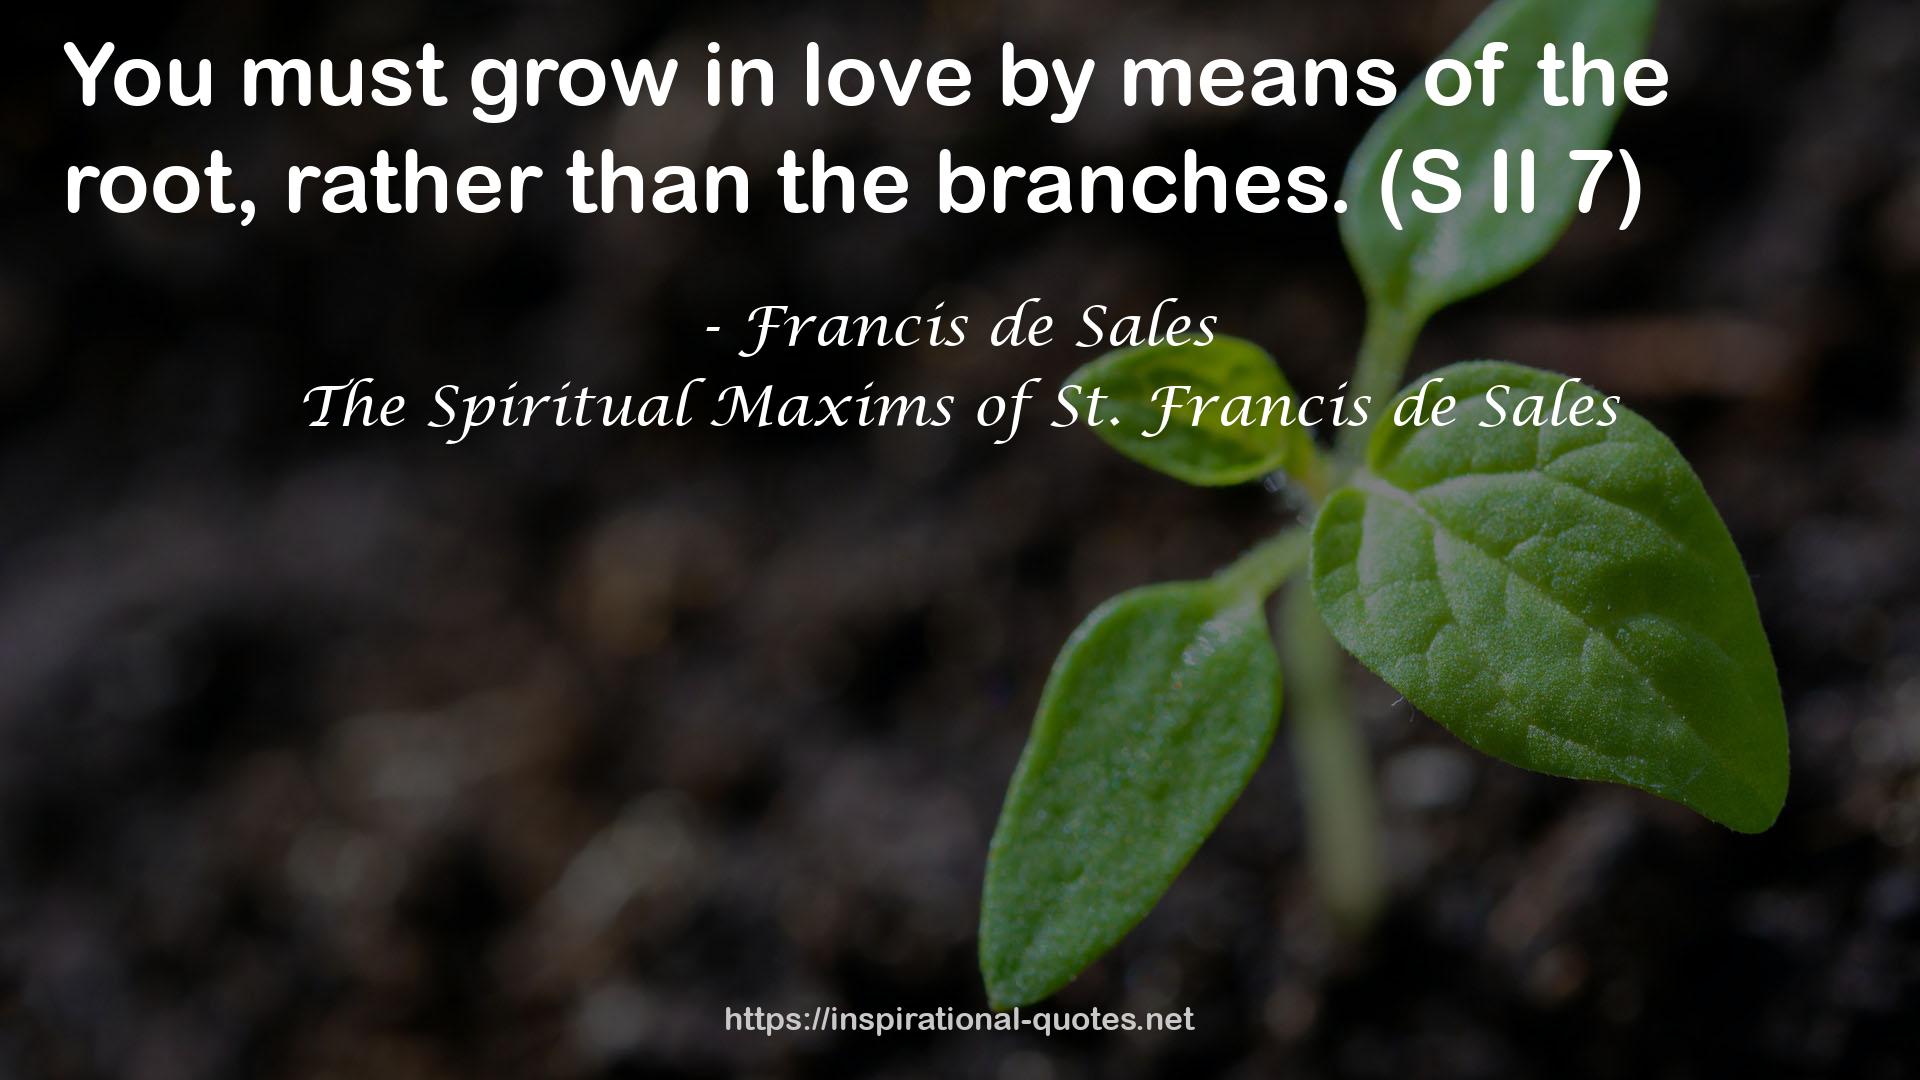 The Spiritual Maxims of St. Francis de Sales QUOTES